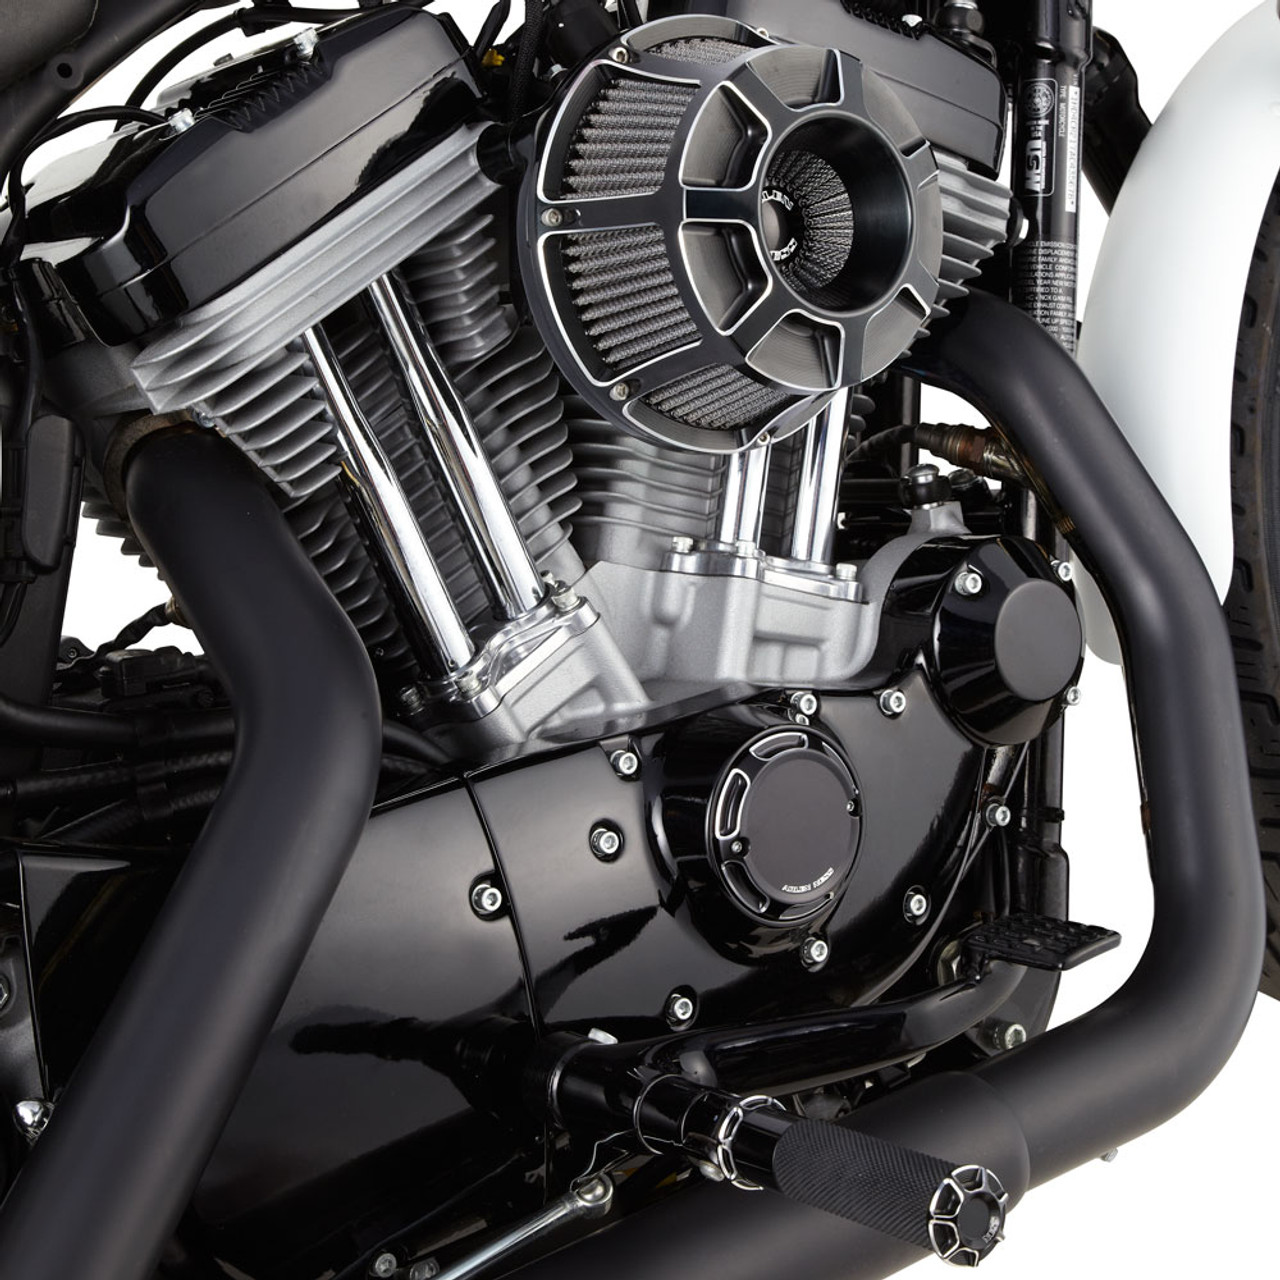 Arlen ness Inverted Series Slot Harley Davidson XL 1200 C